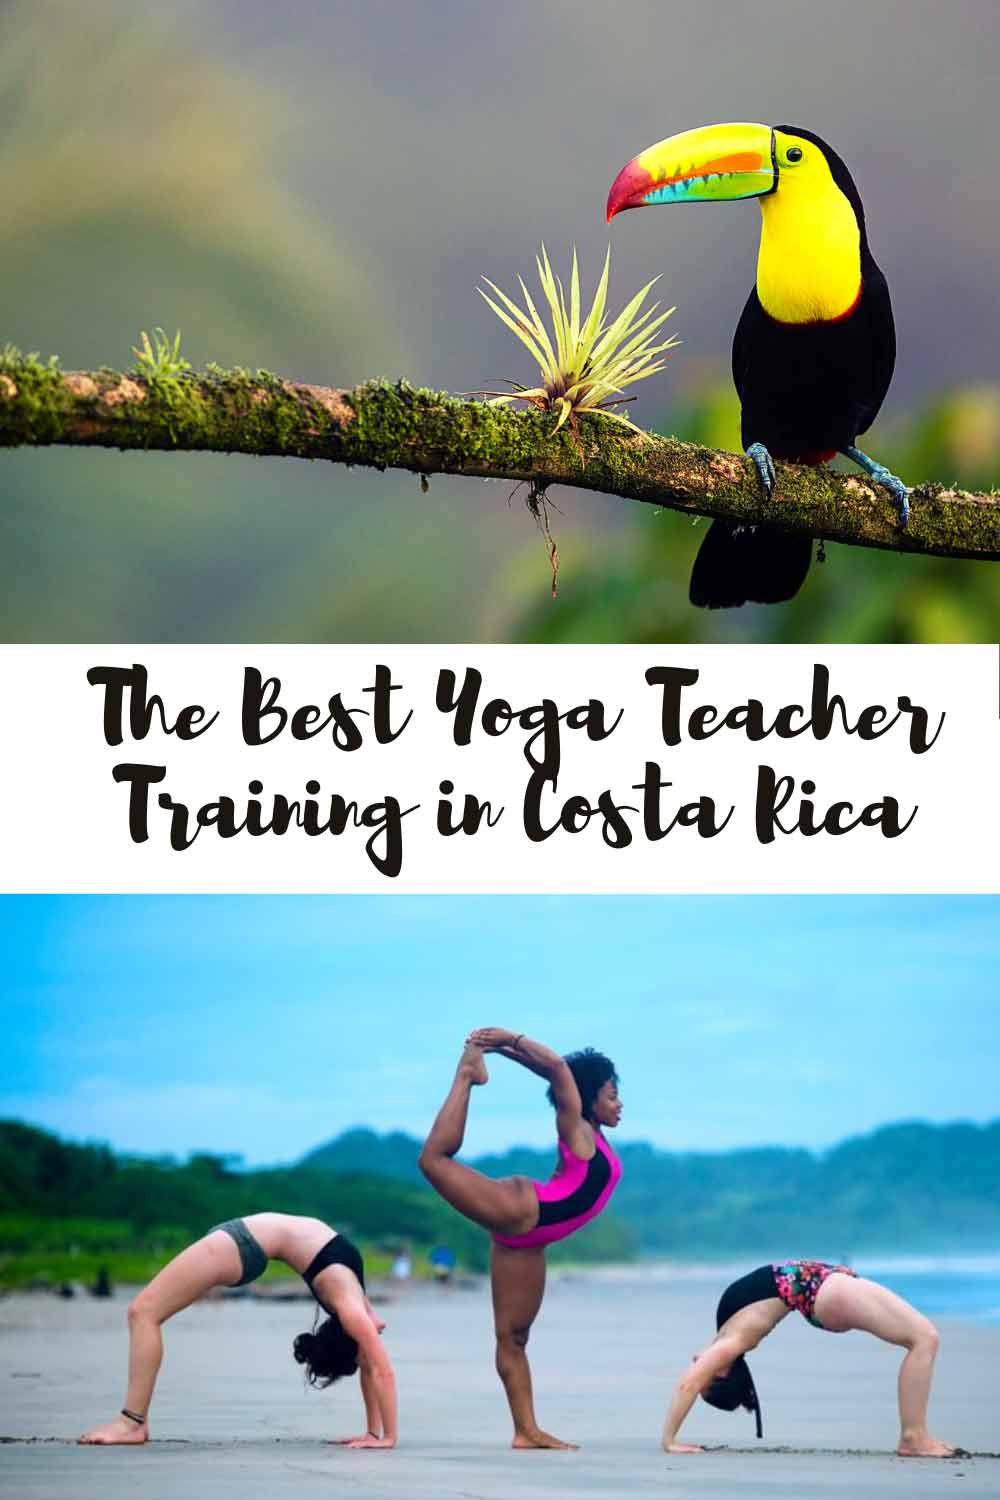 The Best Yoga Teacher Training in Costa Rica